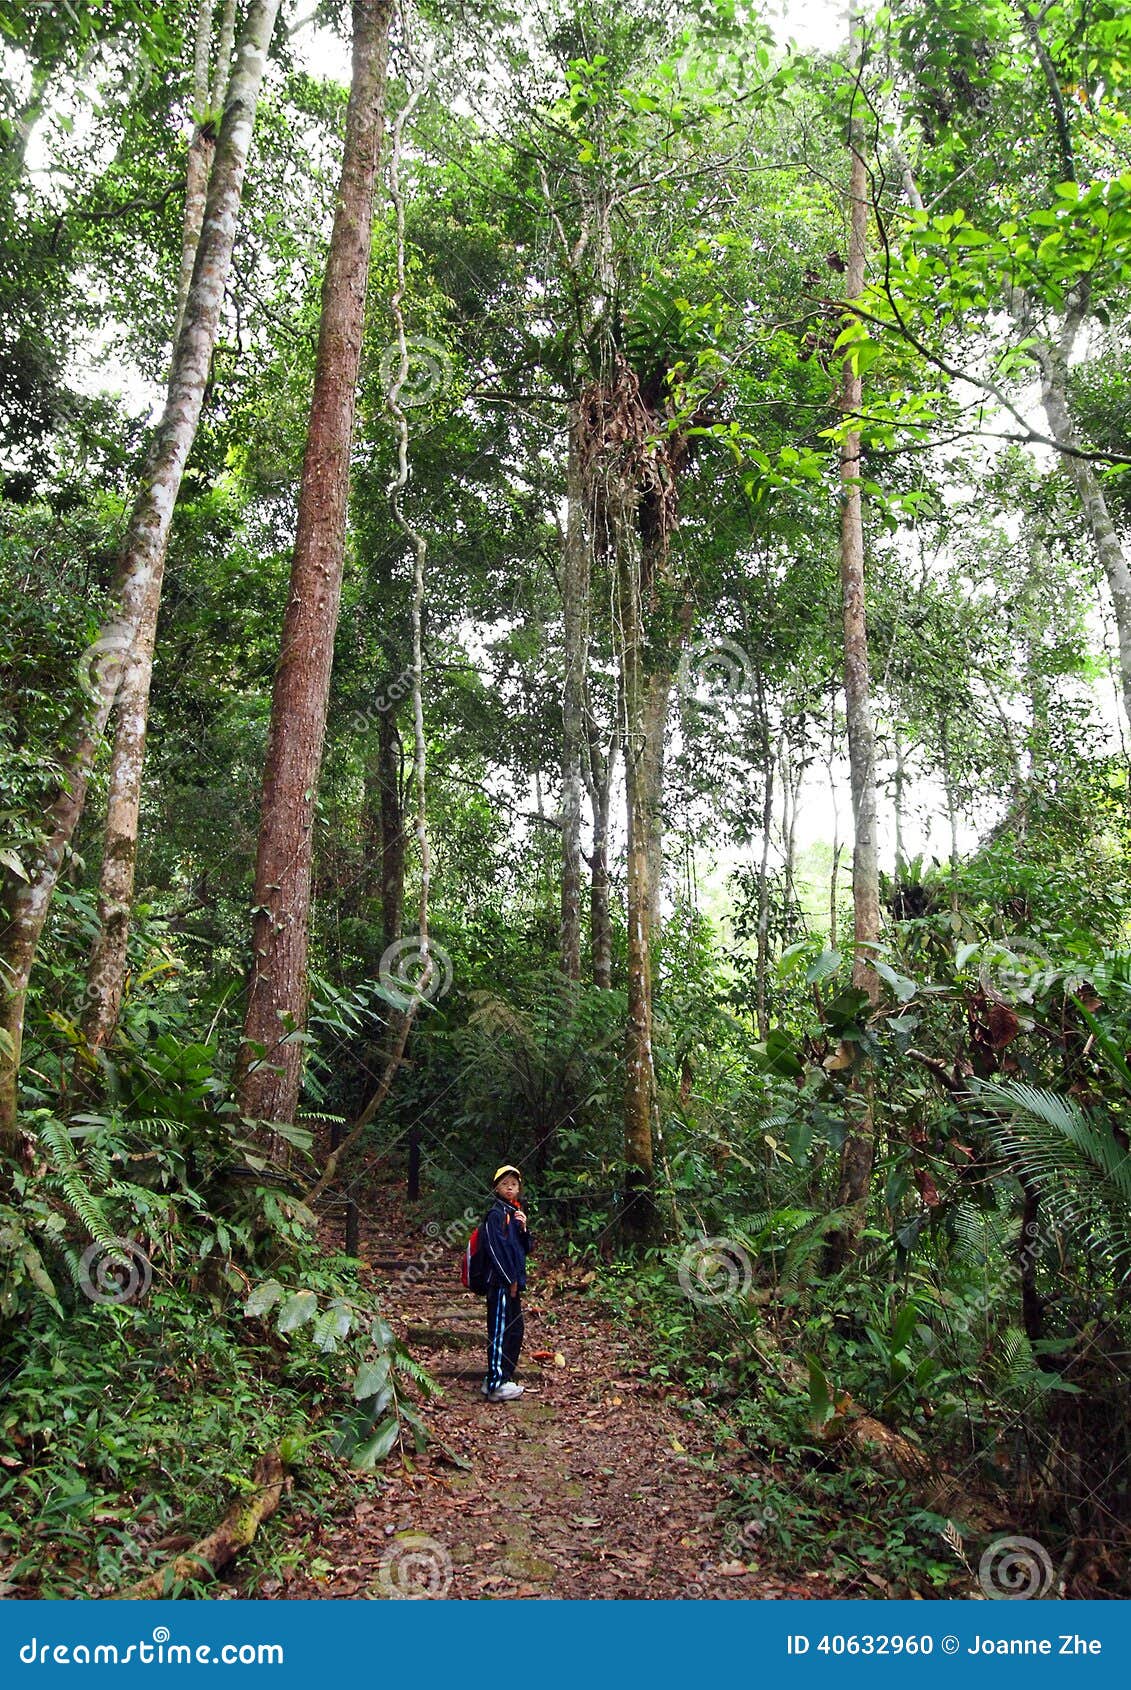 Malaysia kuala lumpur louis vuitton hi-res stock photography and images -  Alamy